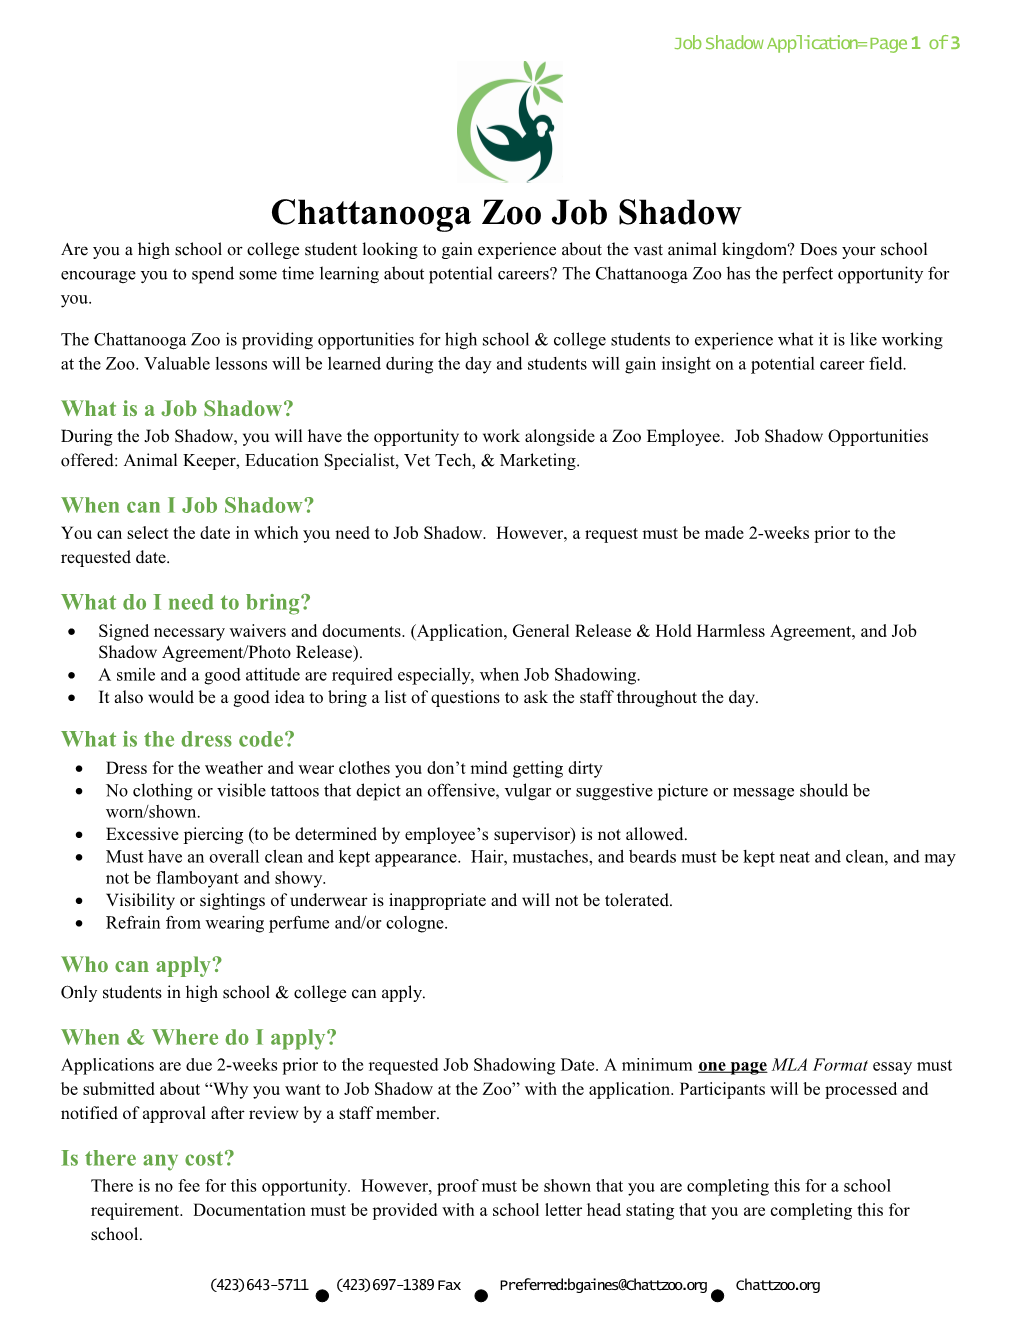 Chattanooga Zoo Job Shadow